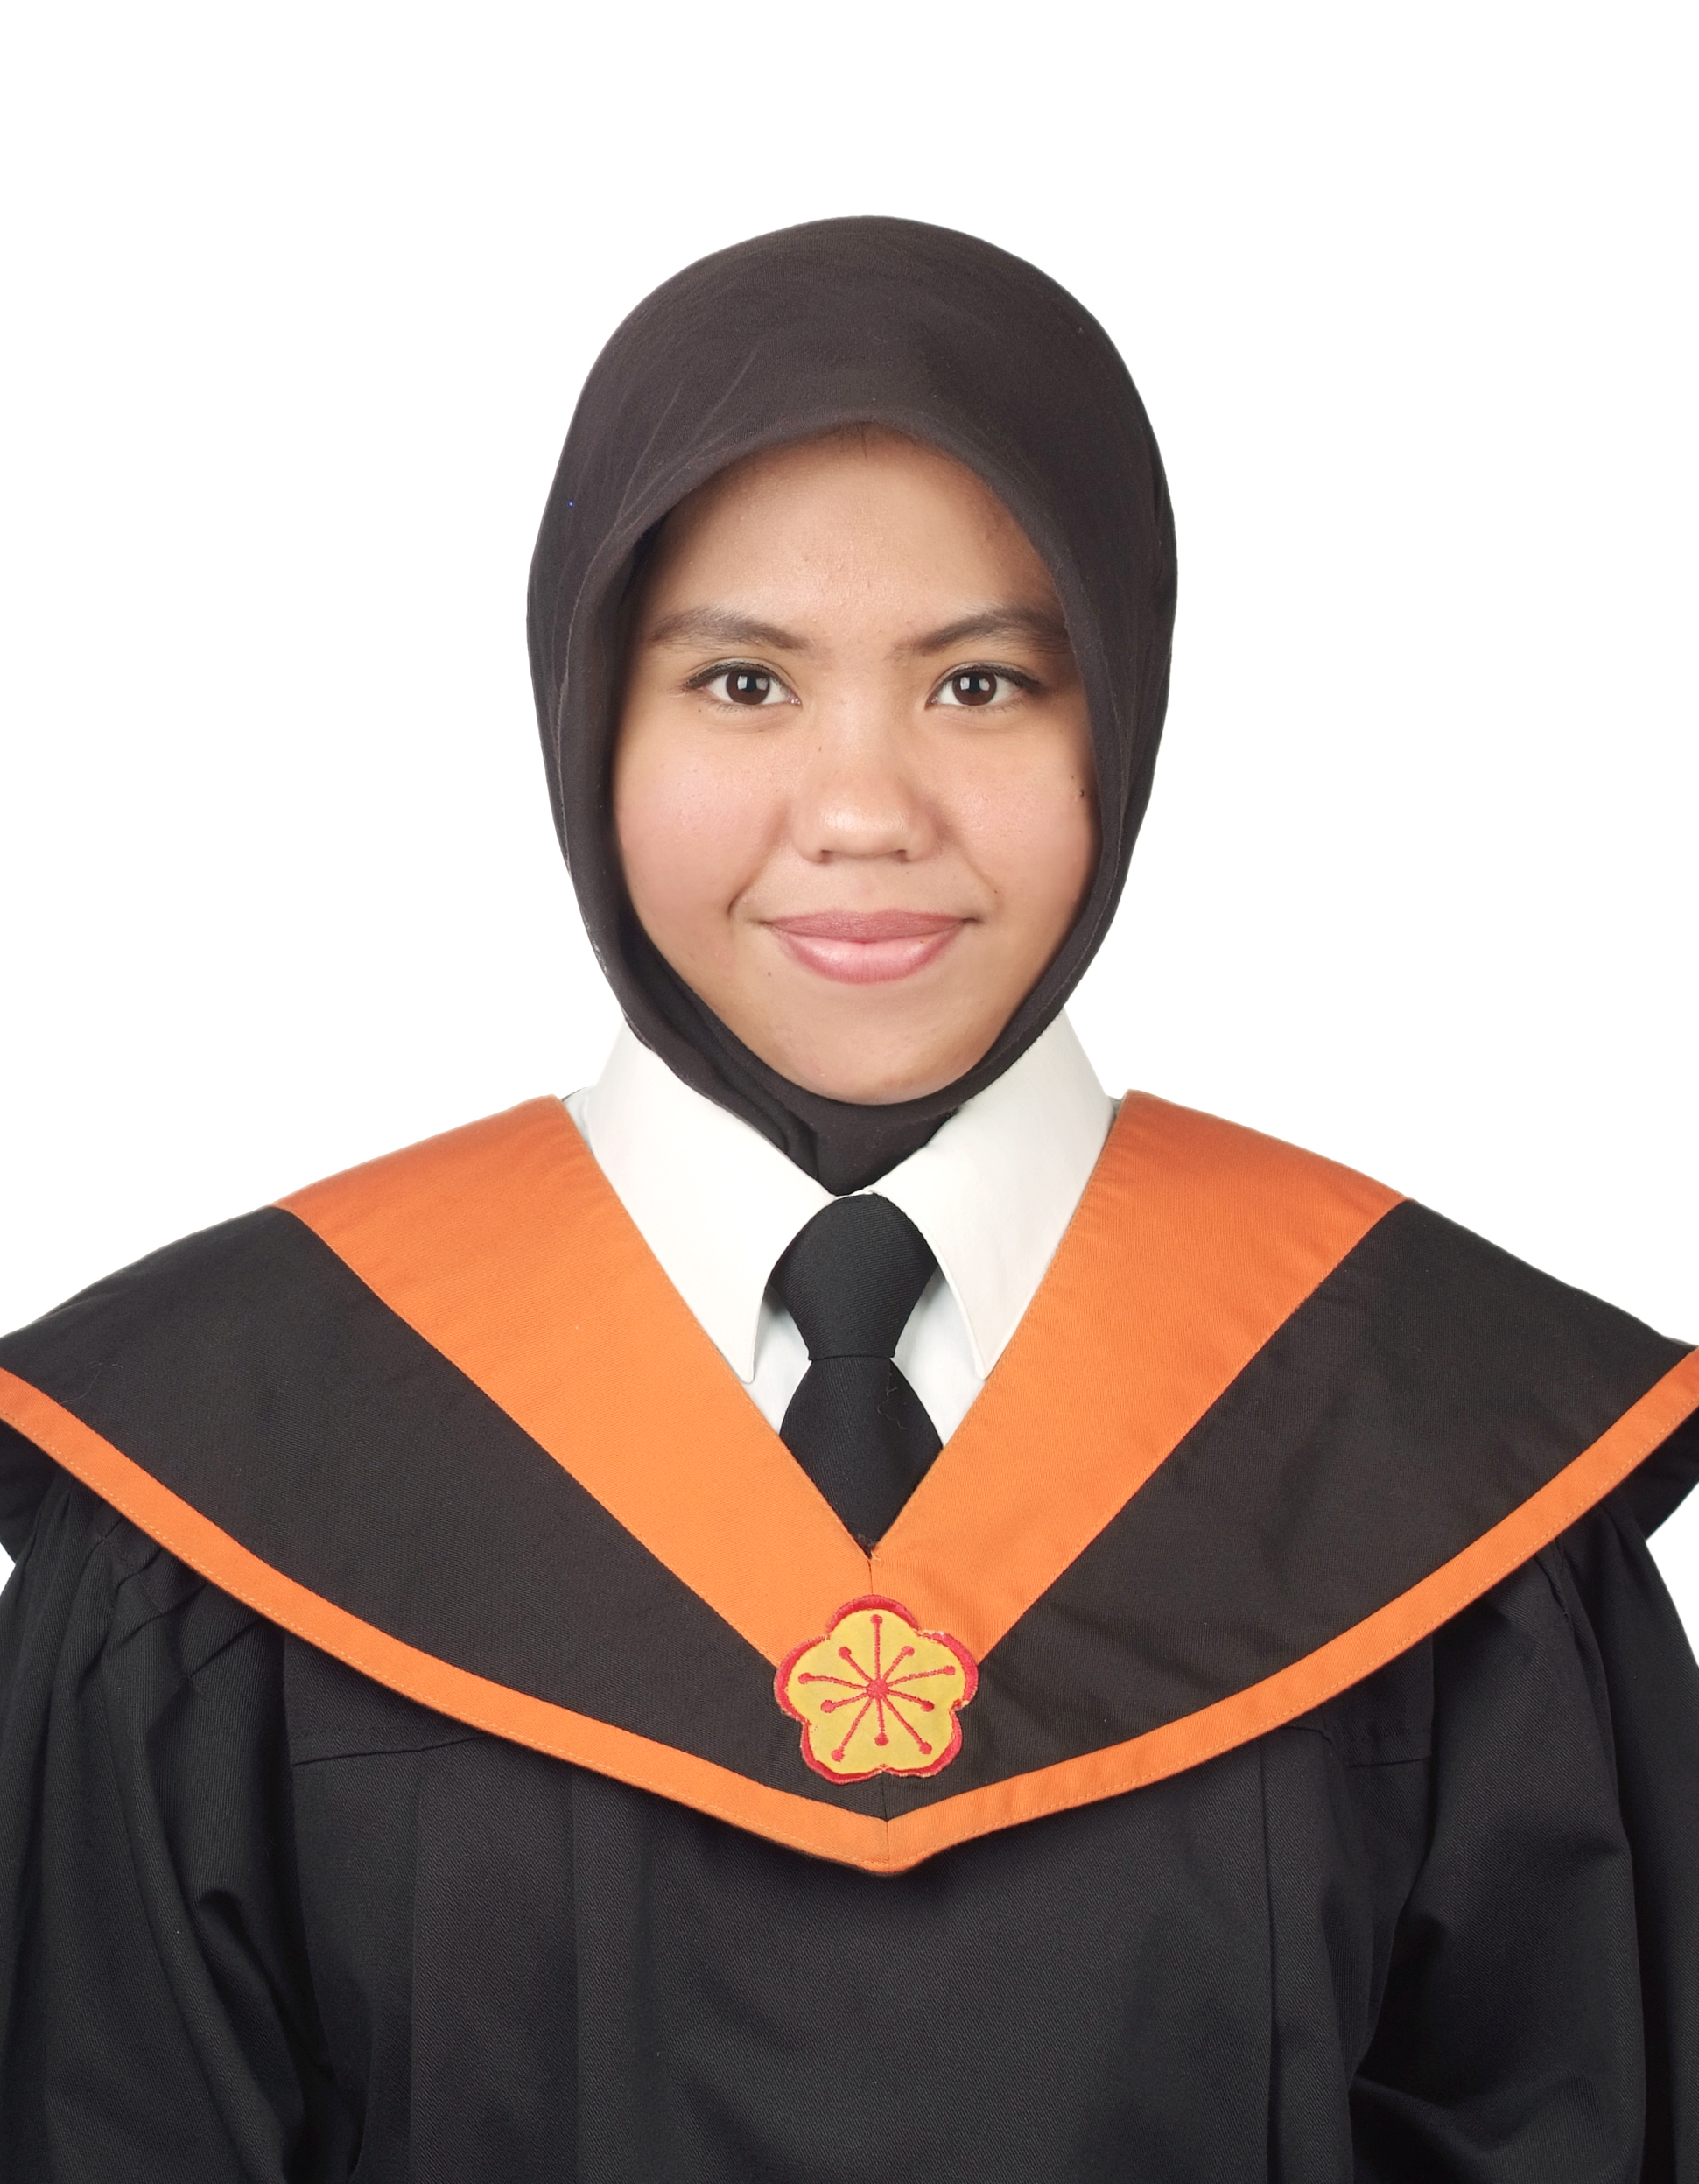 Erlin Tresna Nurlianti Wahyudin : PhD Student, Material Science and Engineering